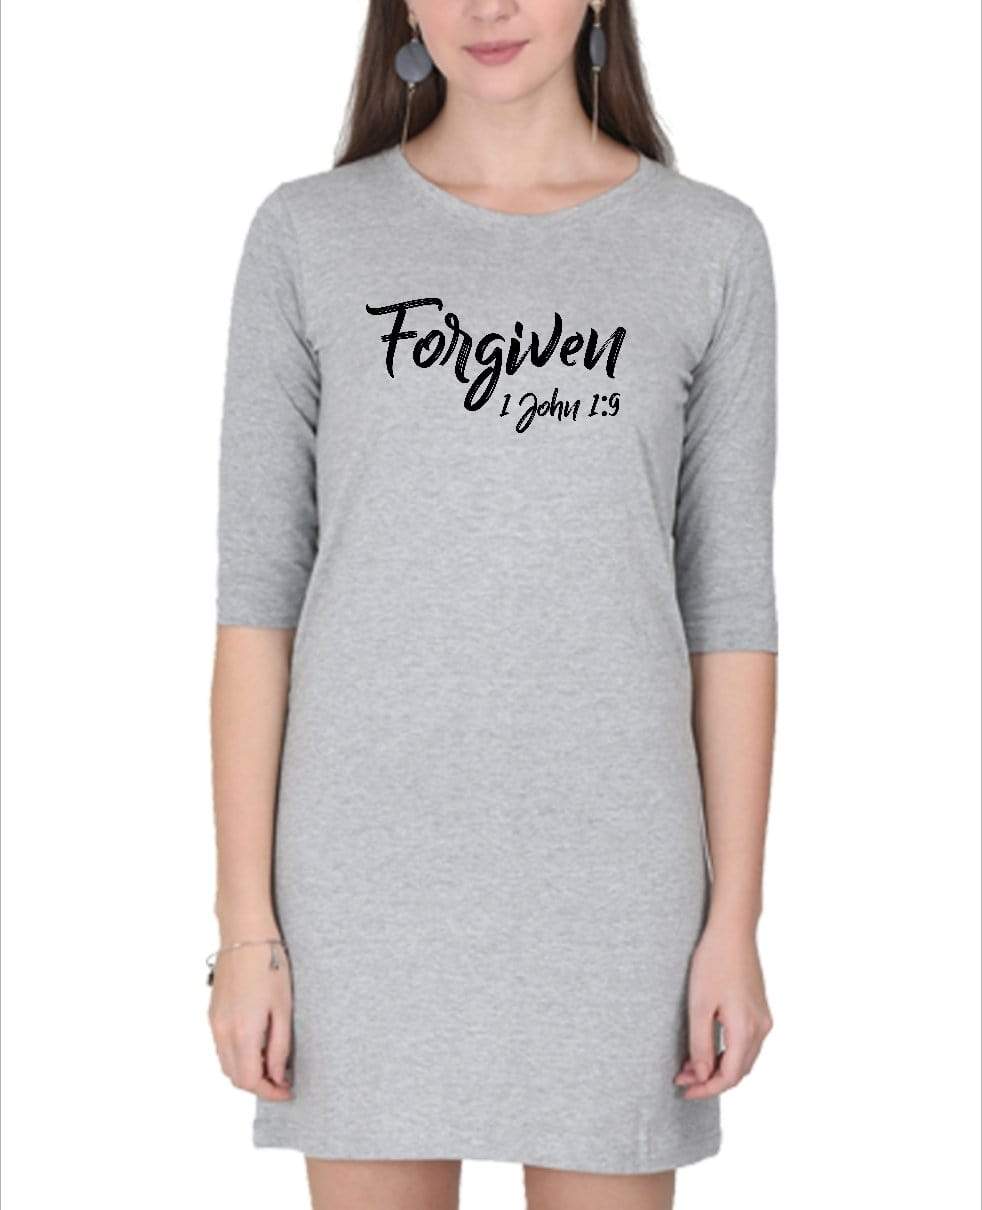 Living Words Women Round Neck T Shirt S / Grey Forgiven 1 John 1:9